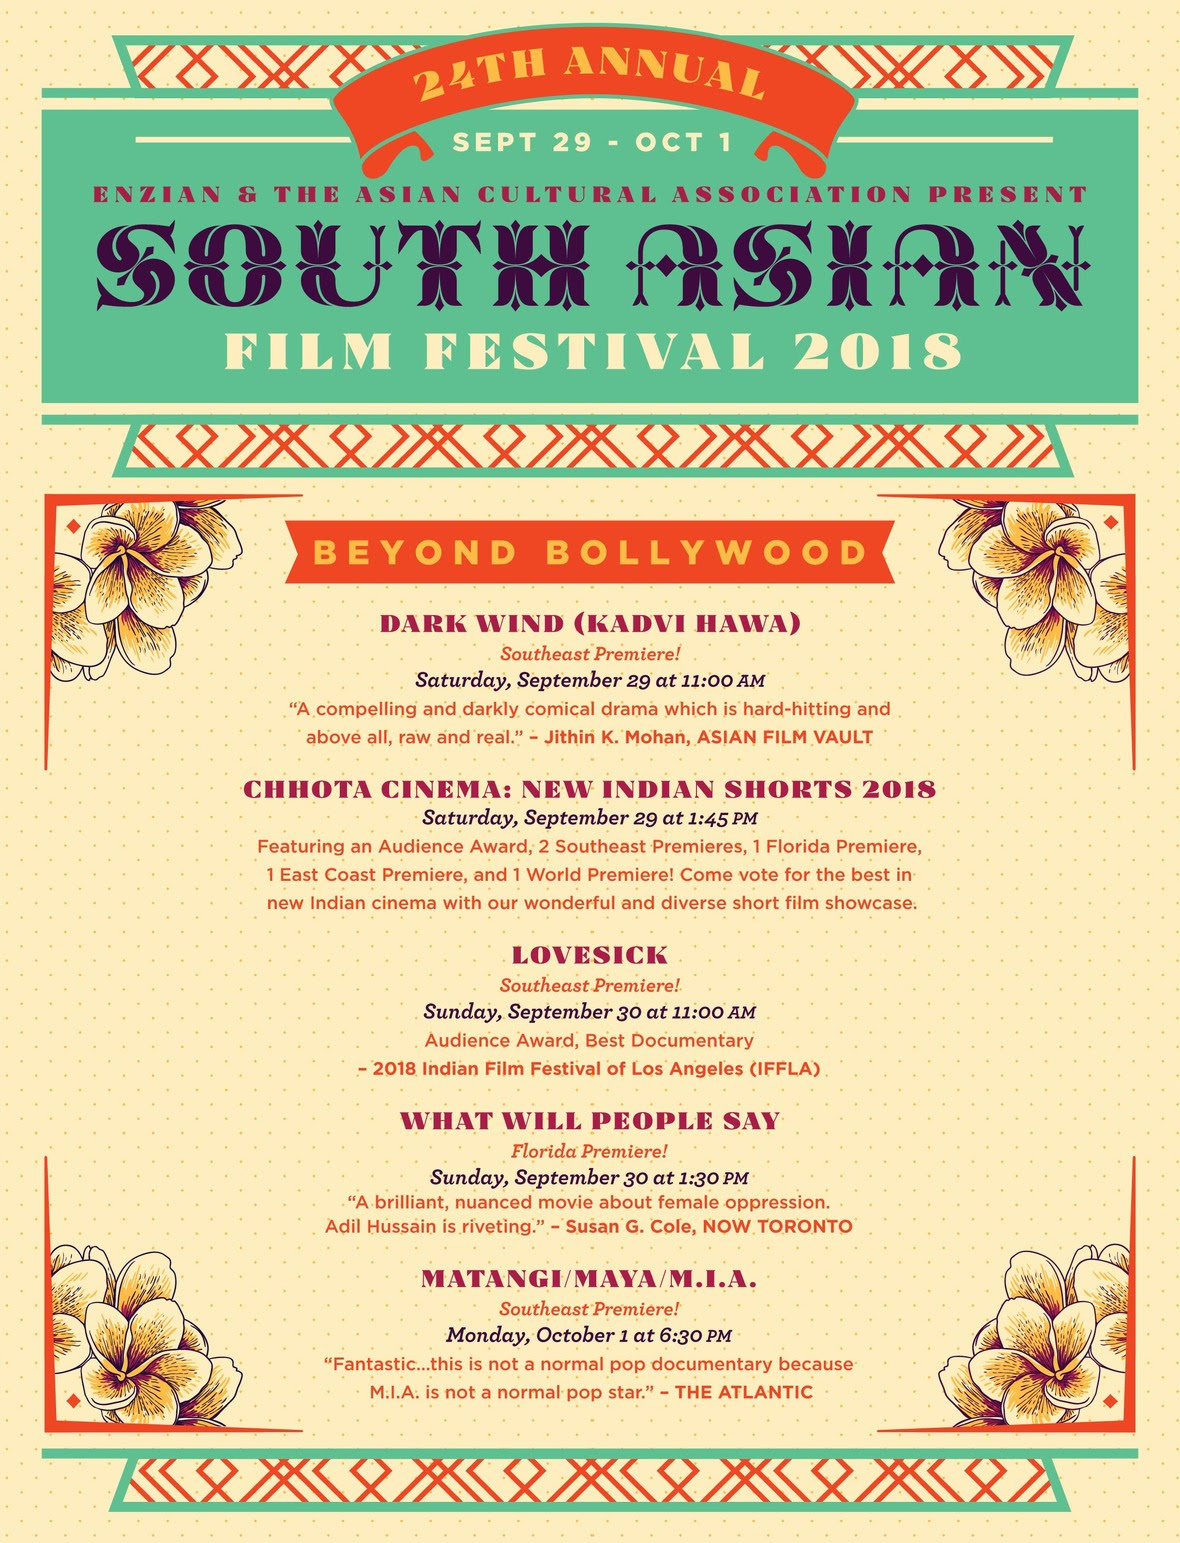 The 24th Annual South Asian Film Festival